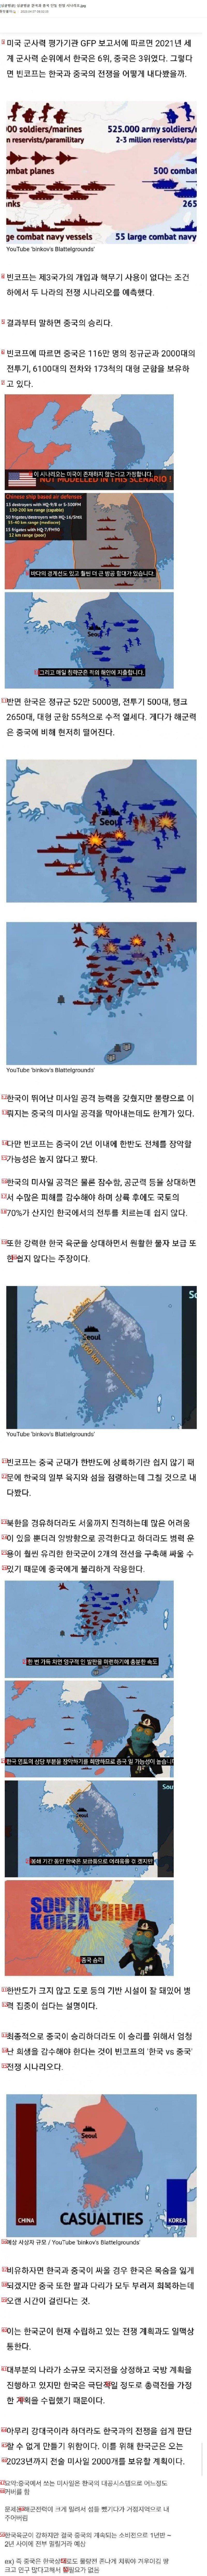 S. Korea and China Single War Scenariojpg